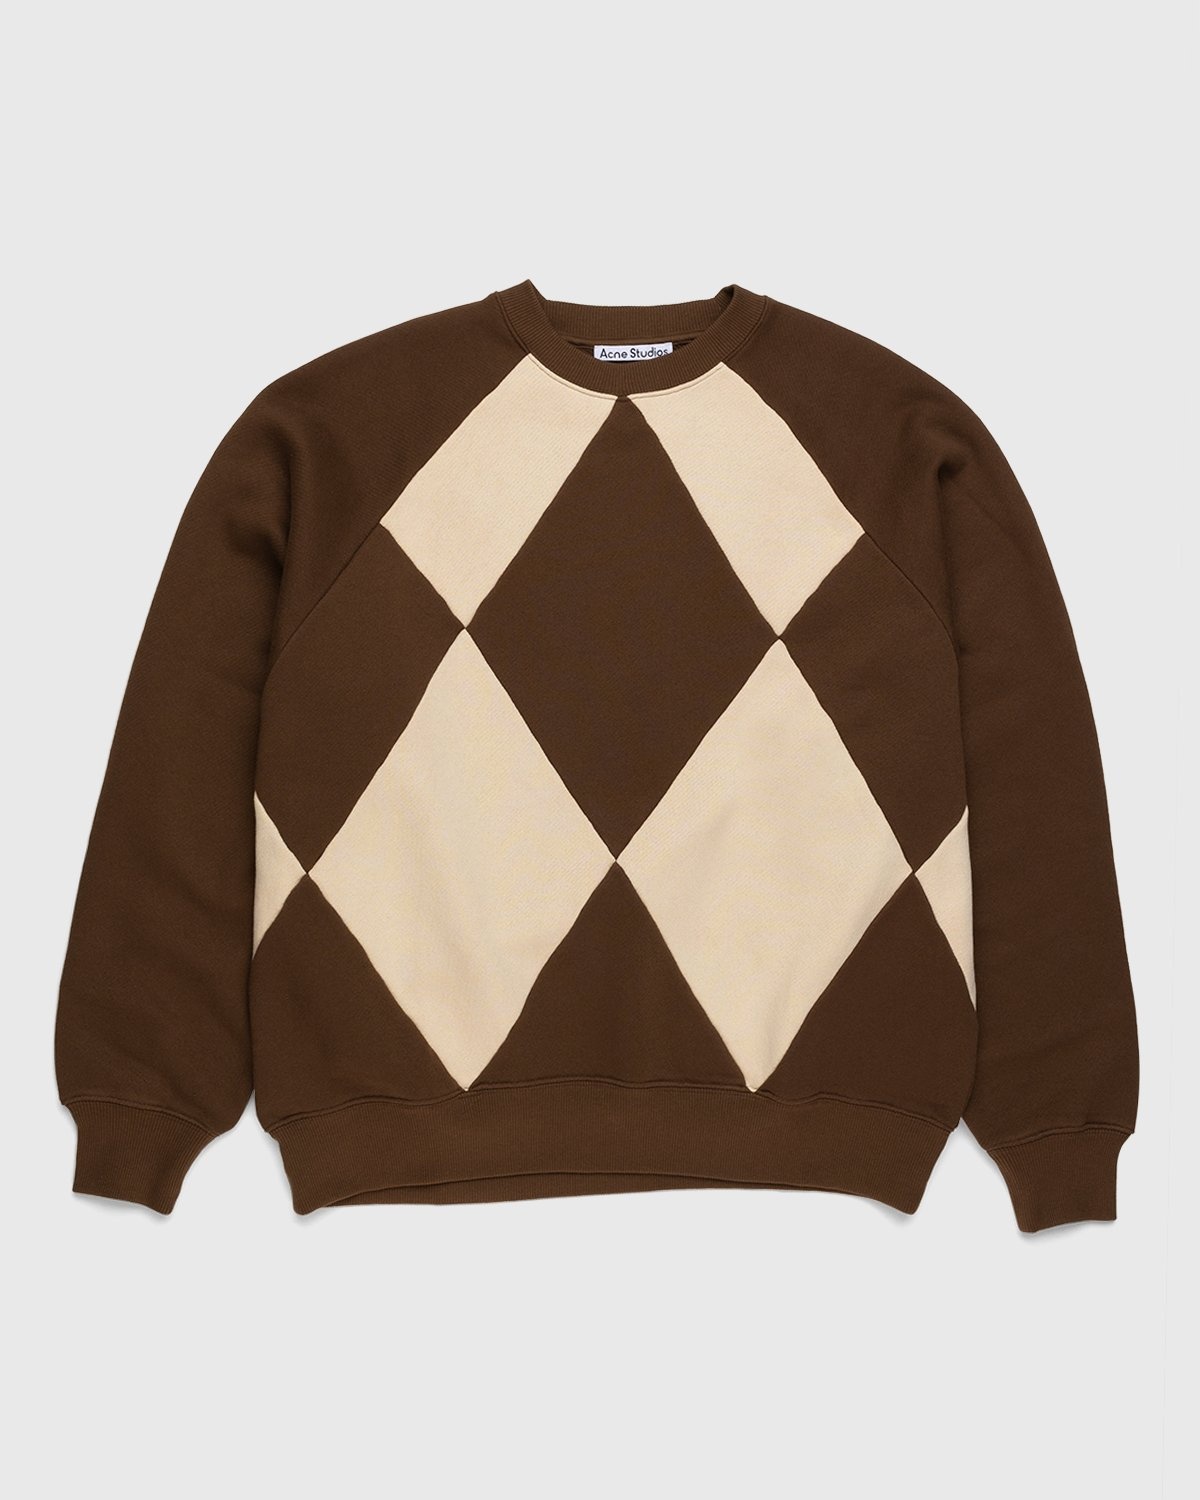 Acne Studios – Sweater Brown - Sweatshirts - Brown - Image 1